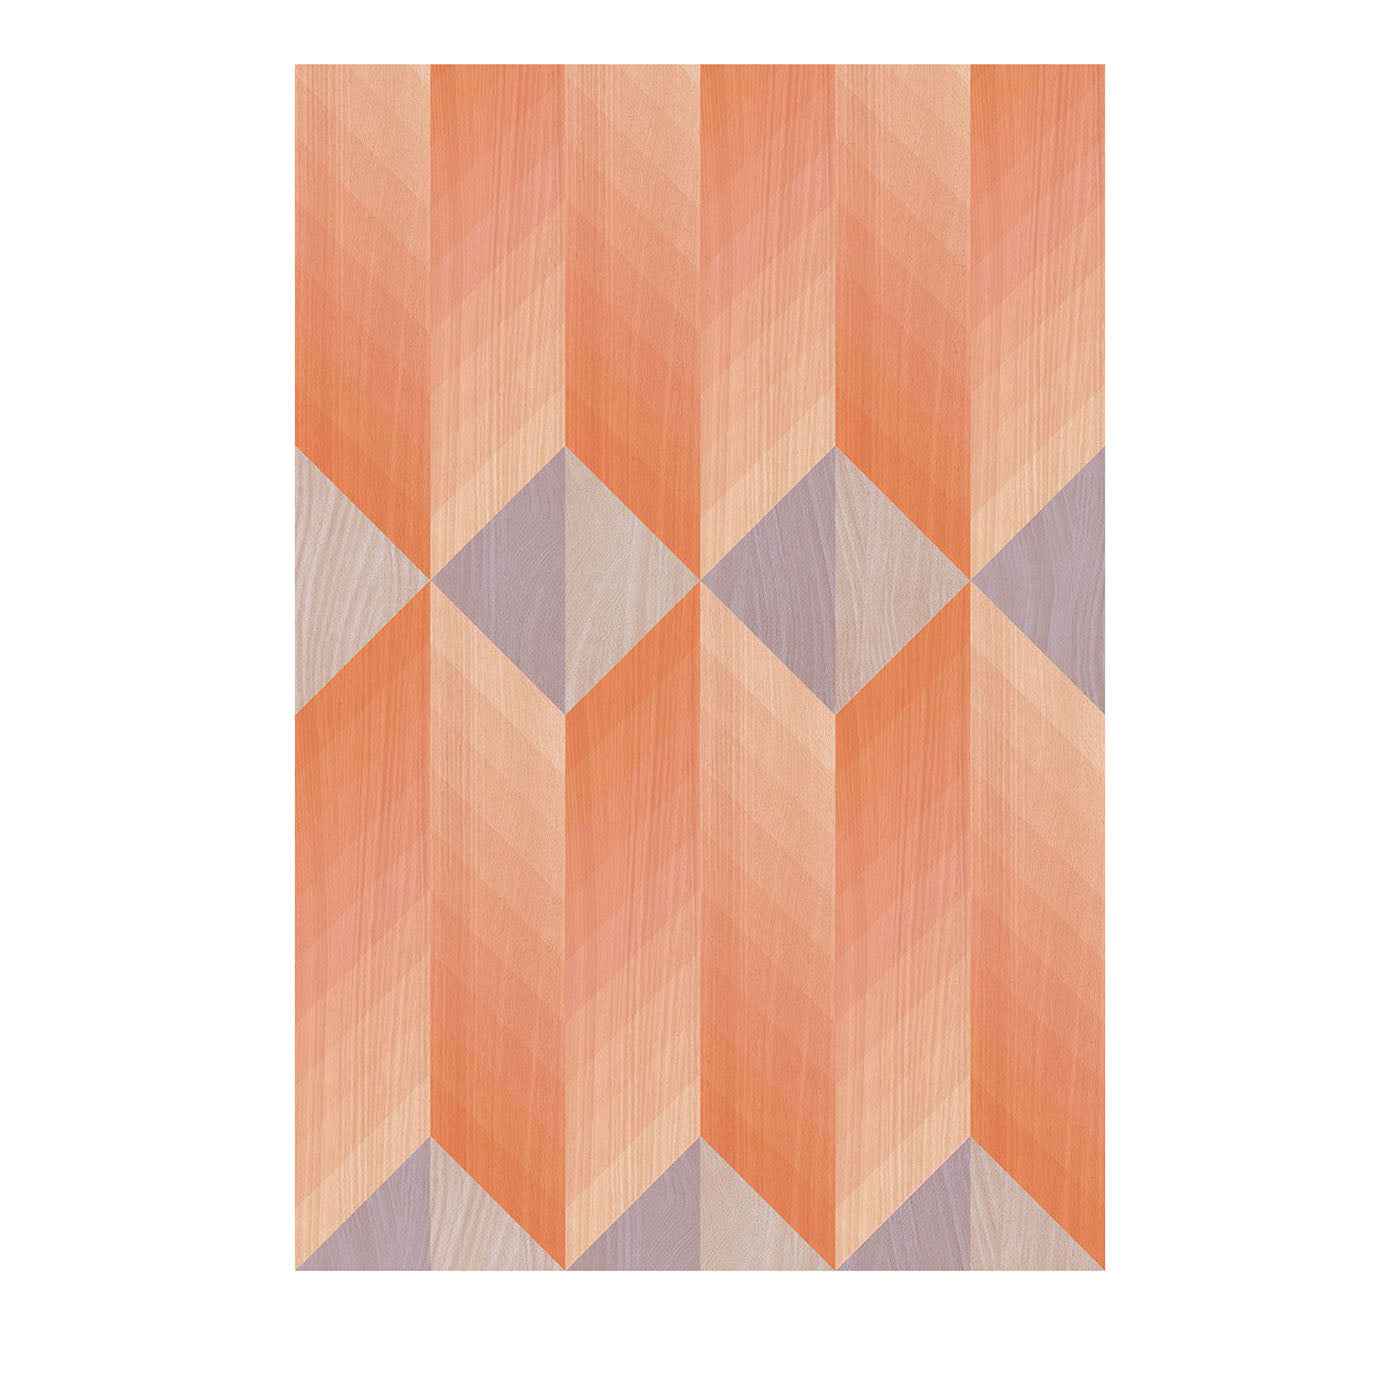 Geometry Triangles Orange Wallpaper - Main view